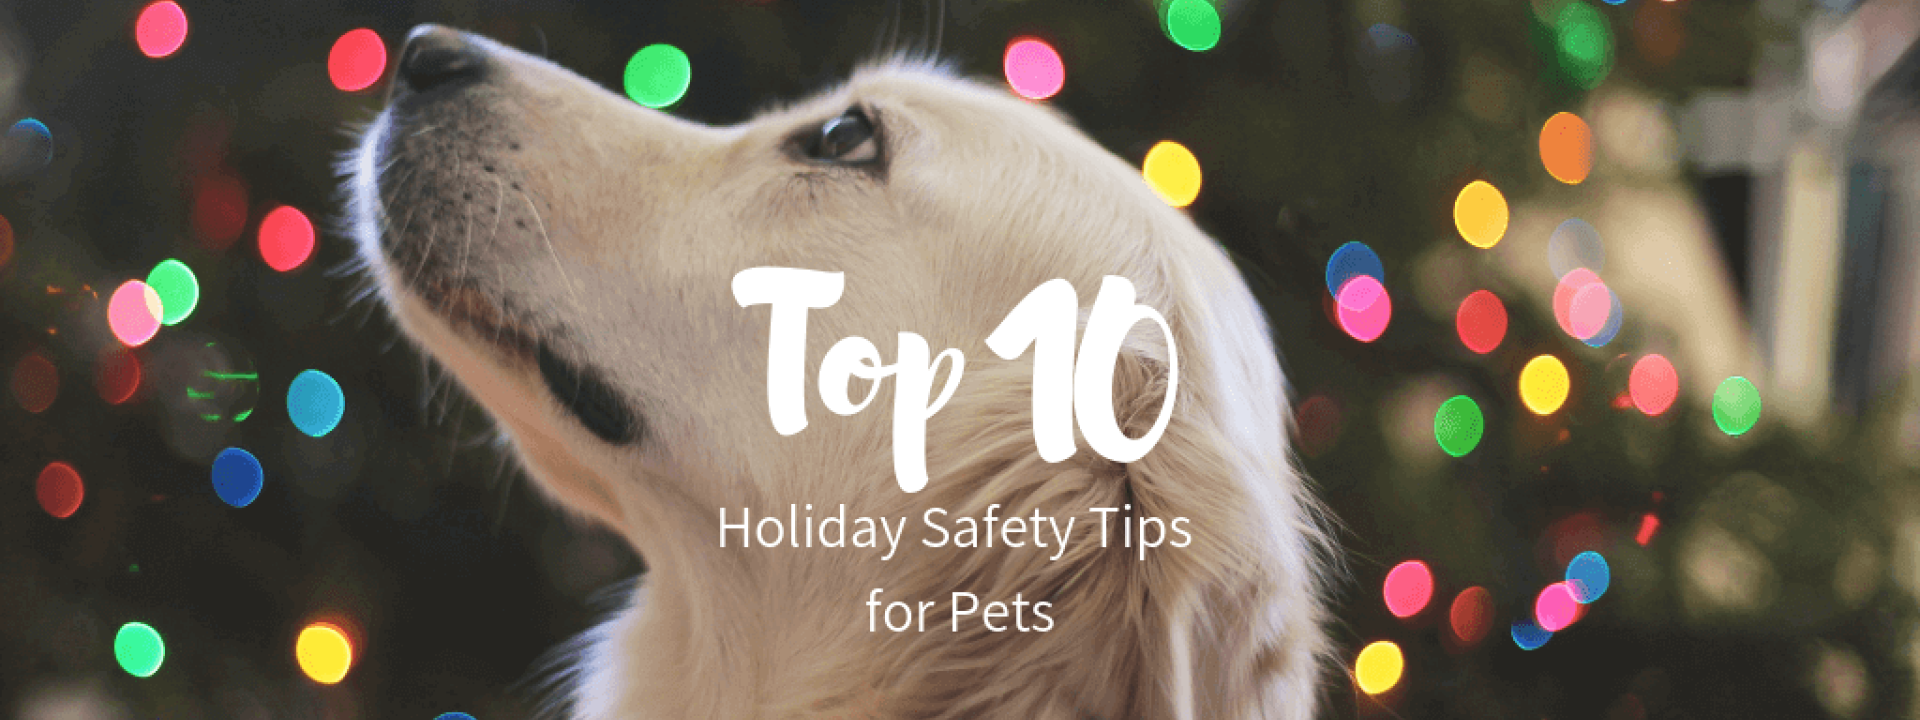 Holiday-Safety-Tips-blog-header.png